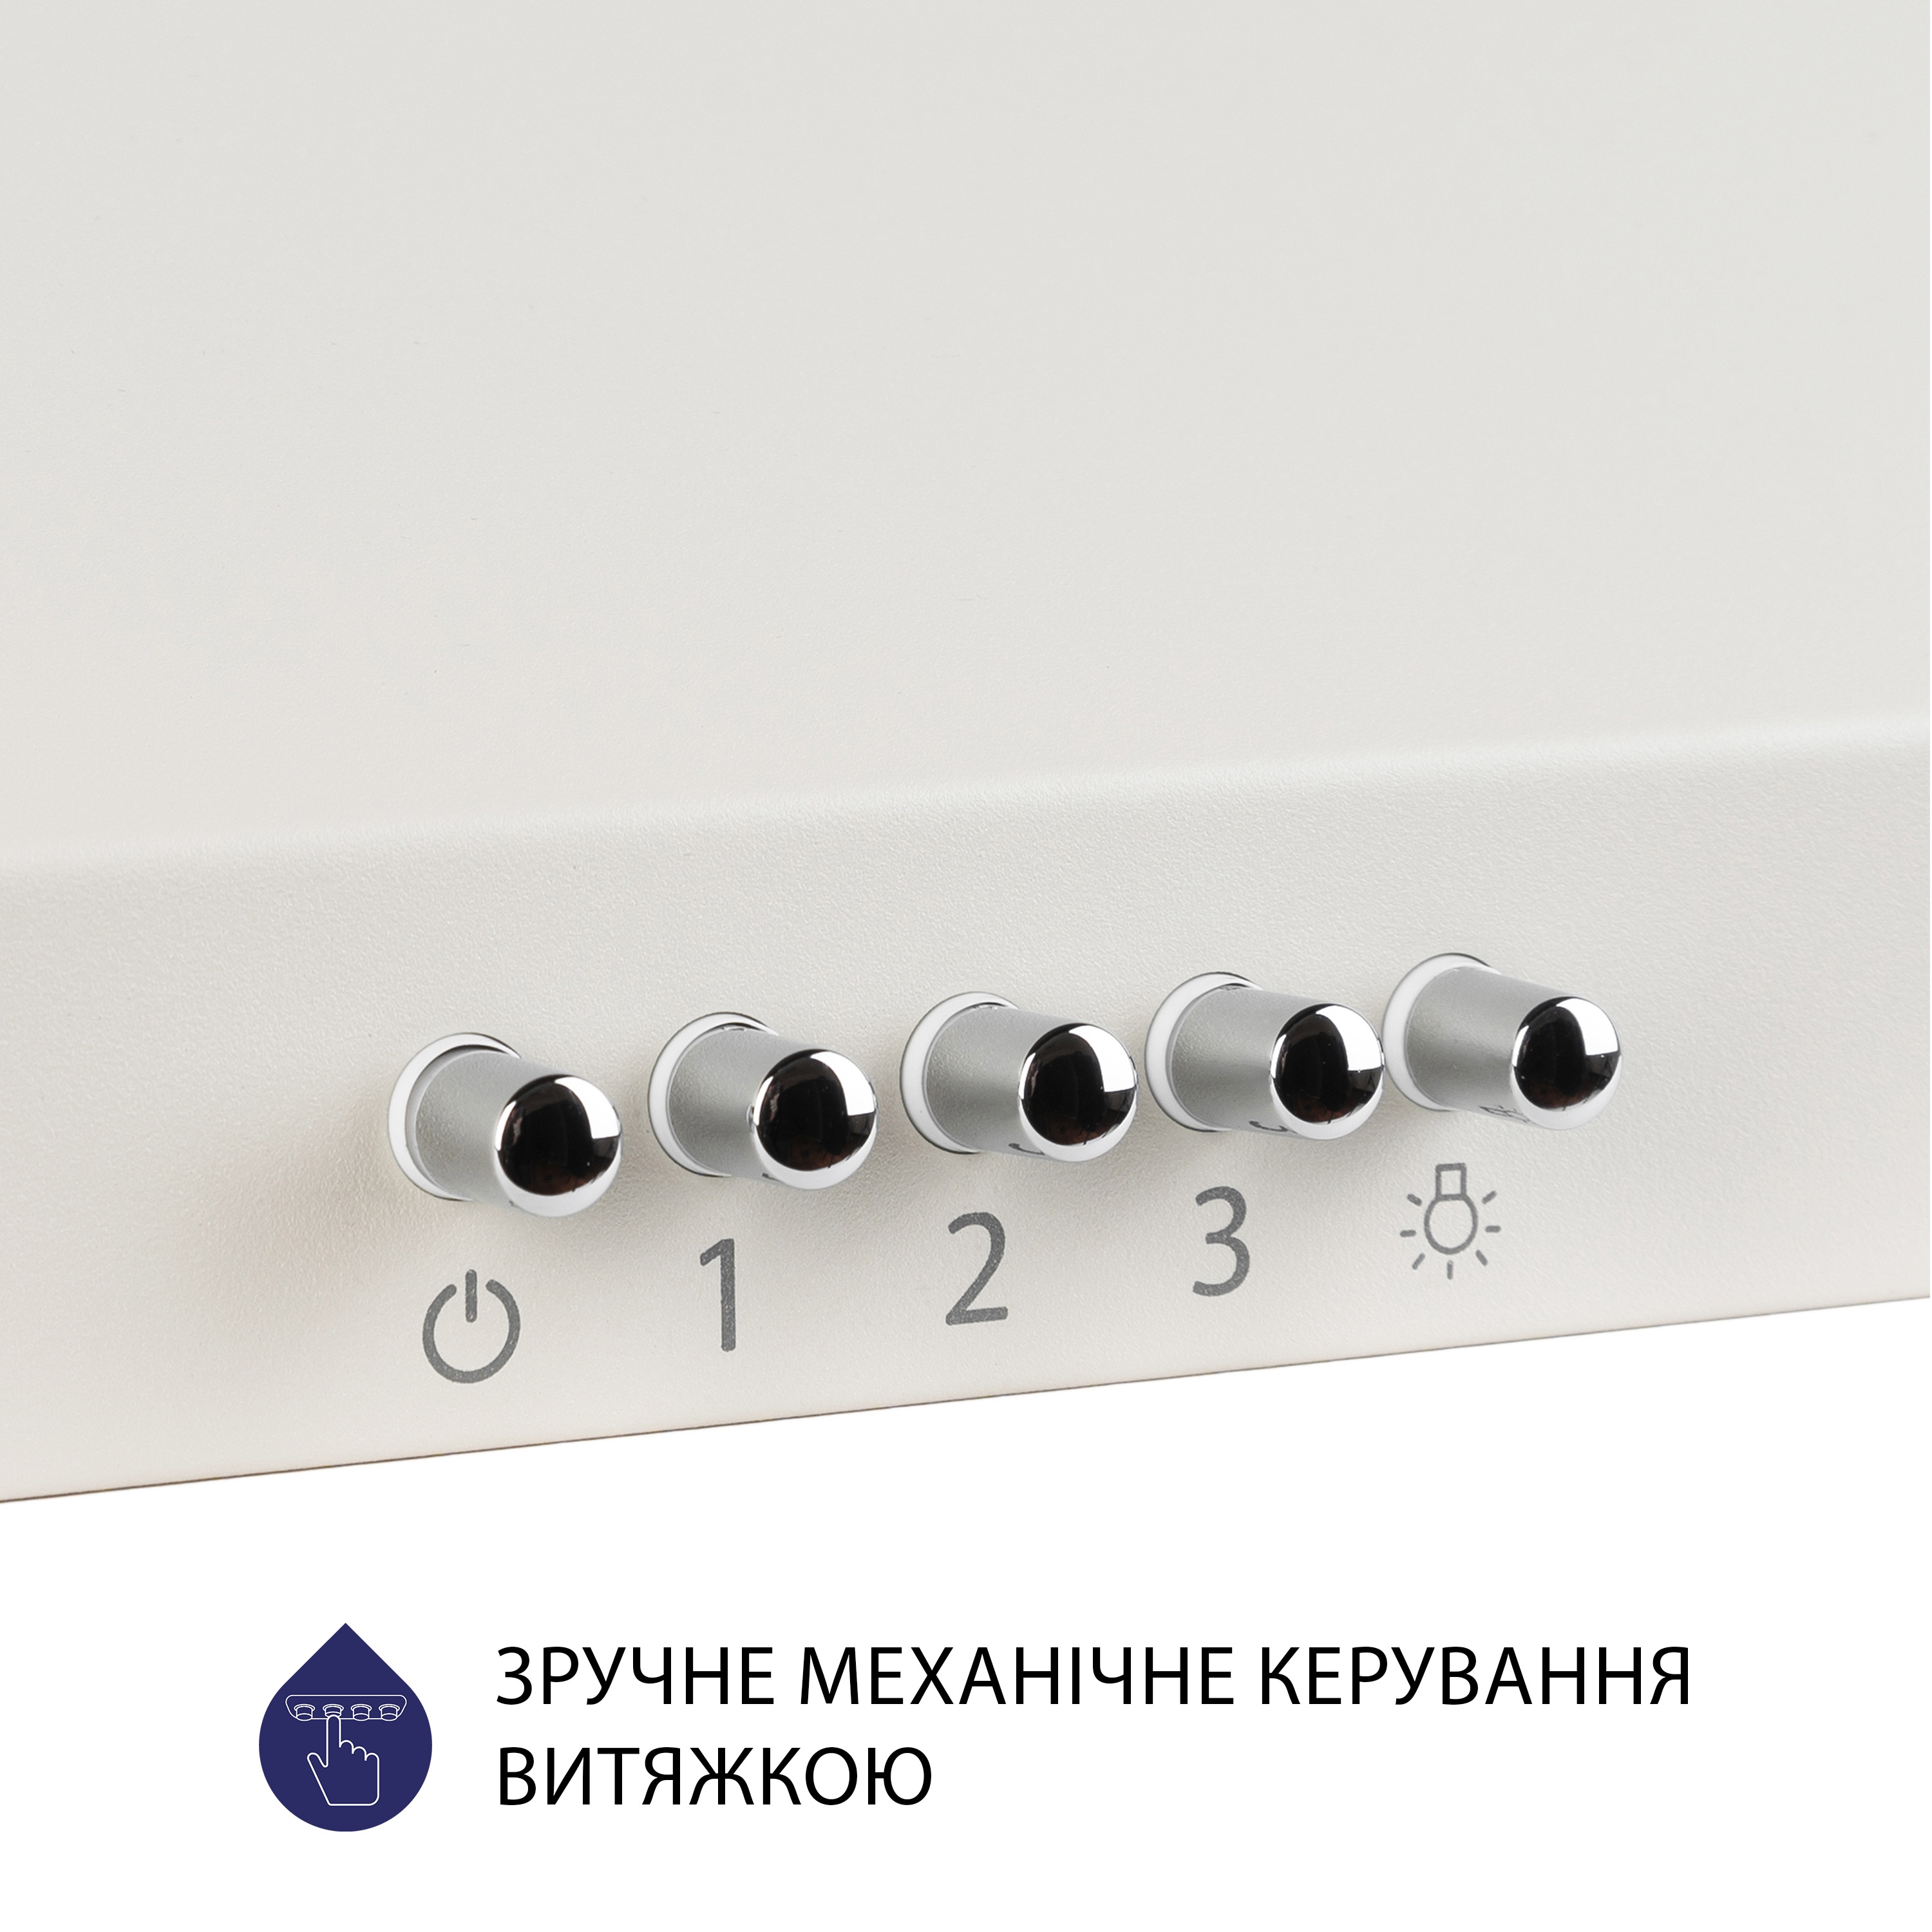 продаём Minola HK 5212 IV 700 LED в Украине - фото 4